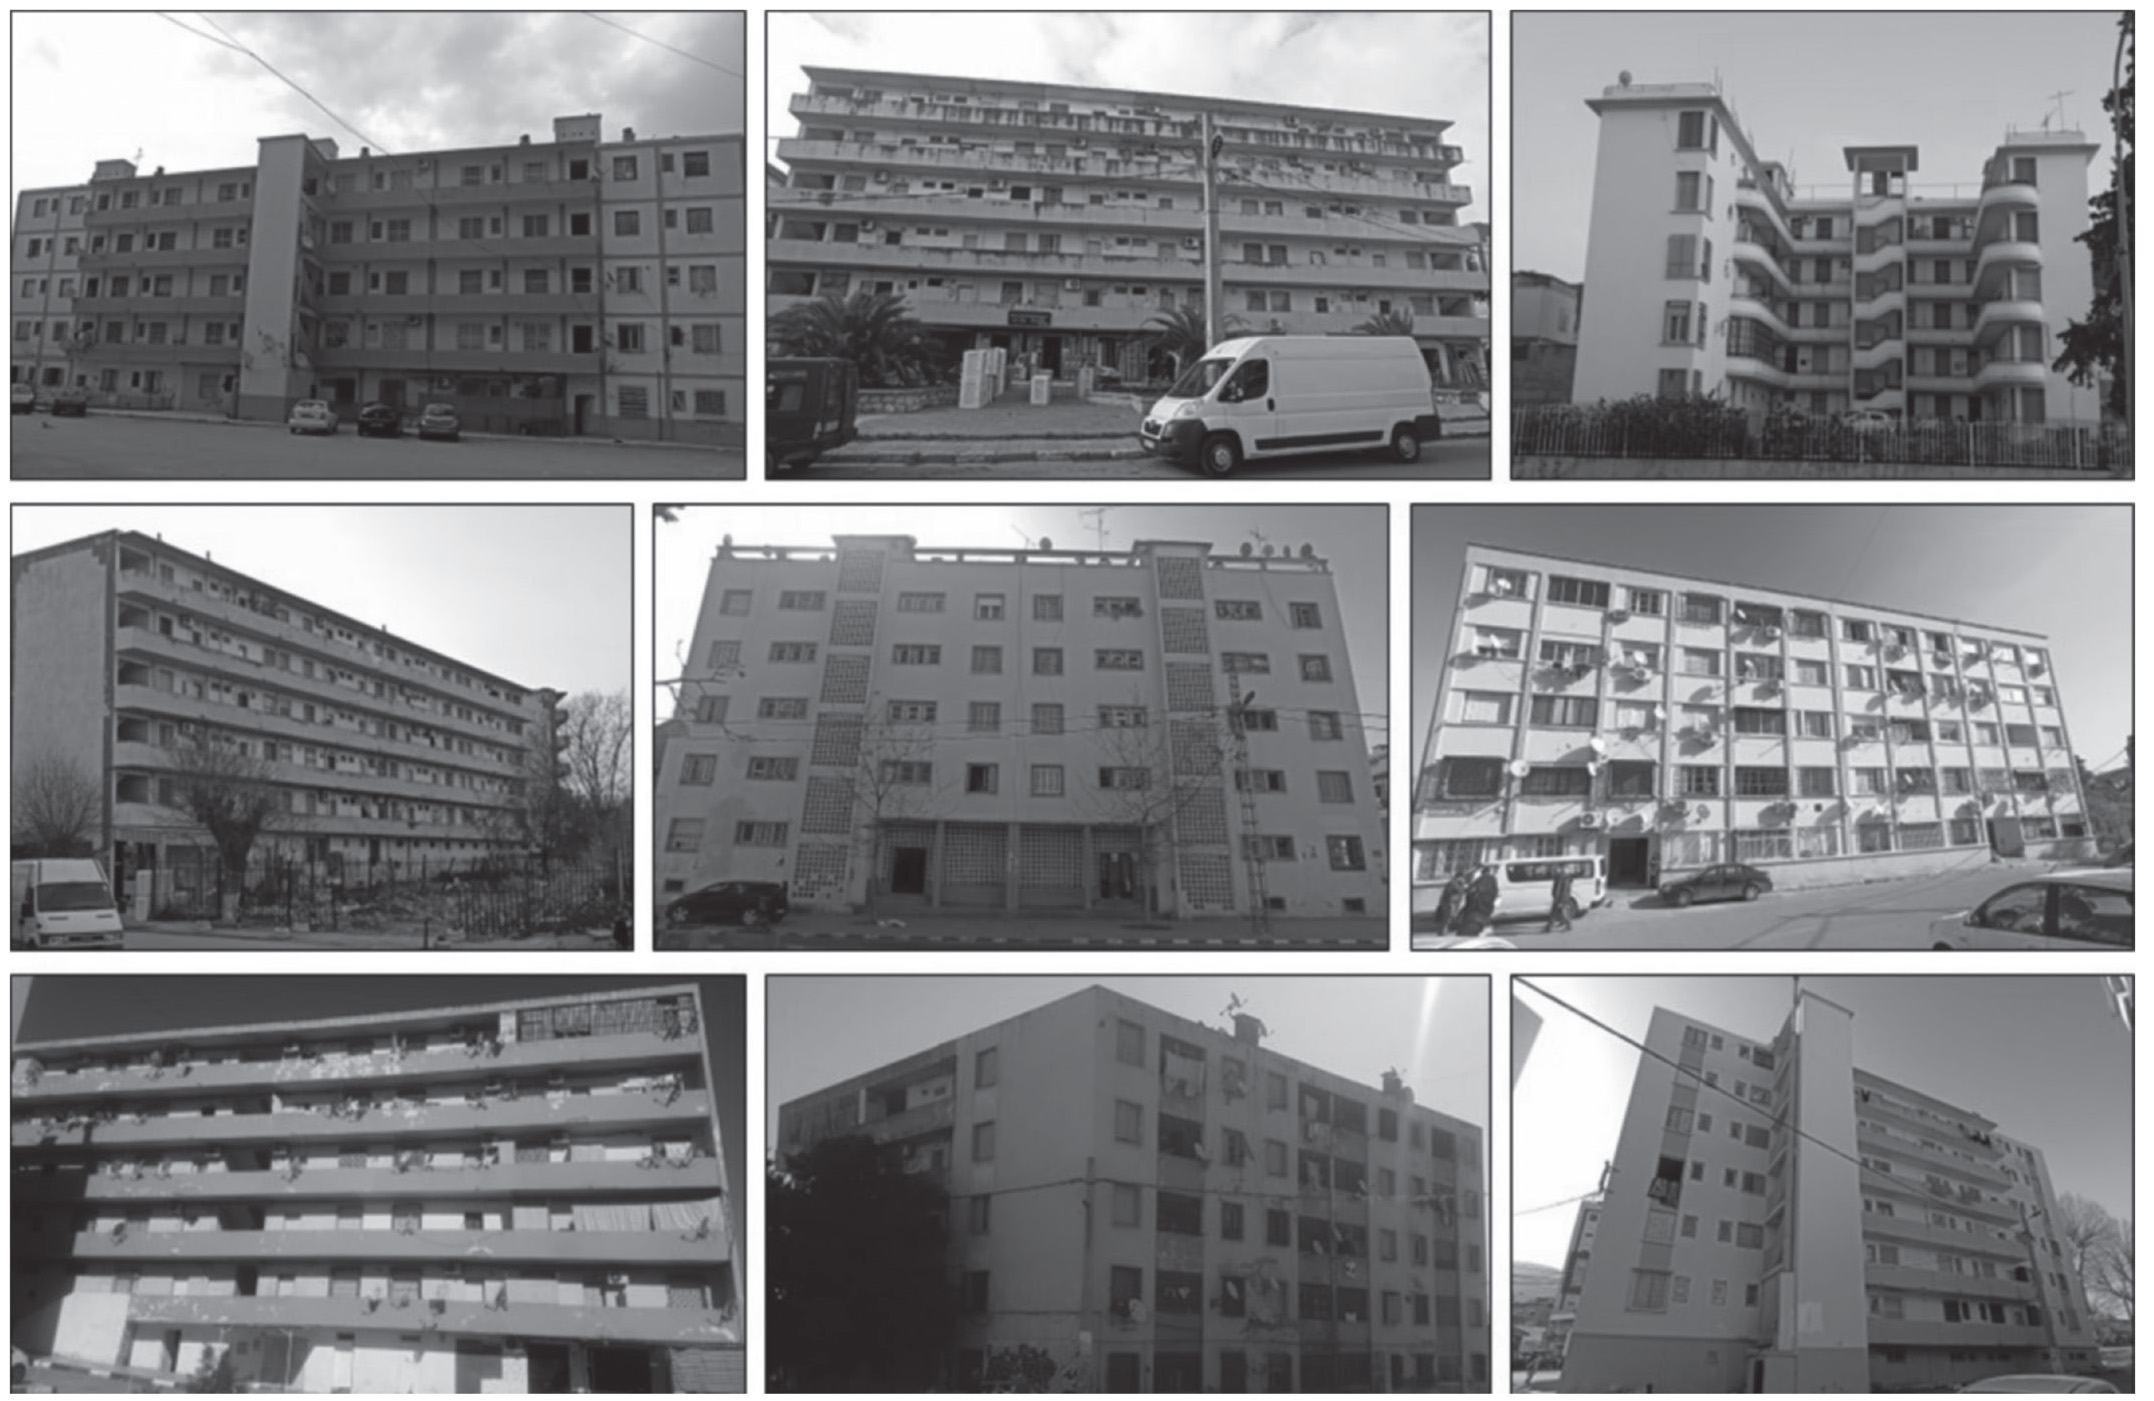 Social Housing of 1950s in Tlemcen (Algeria): An Architectural View